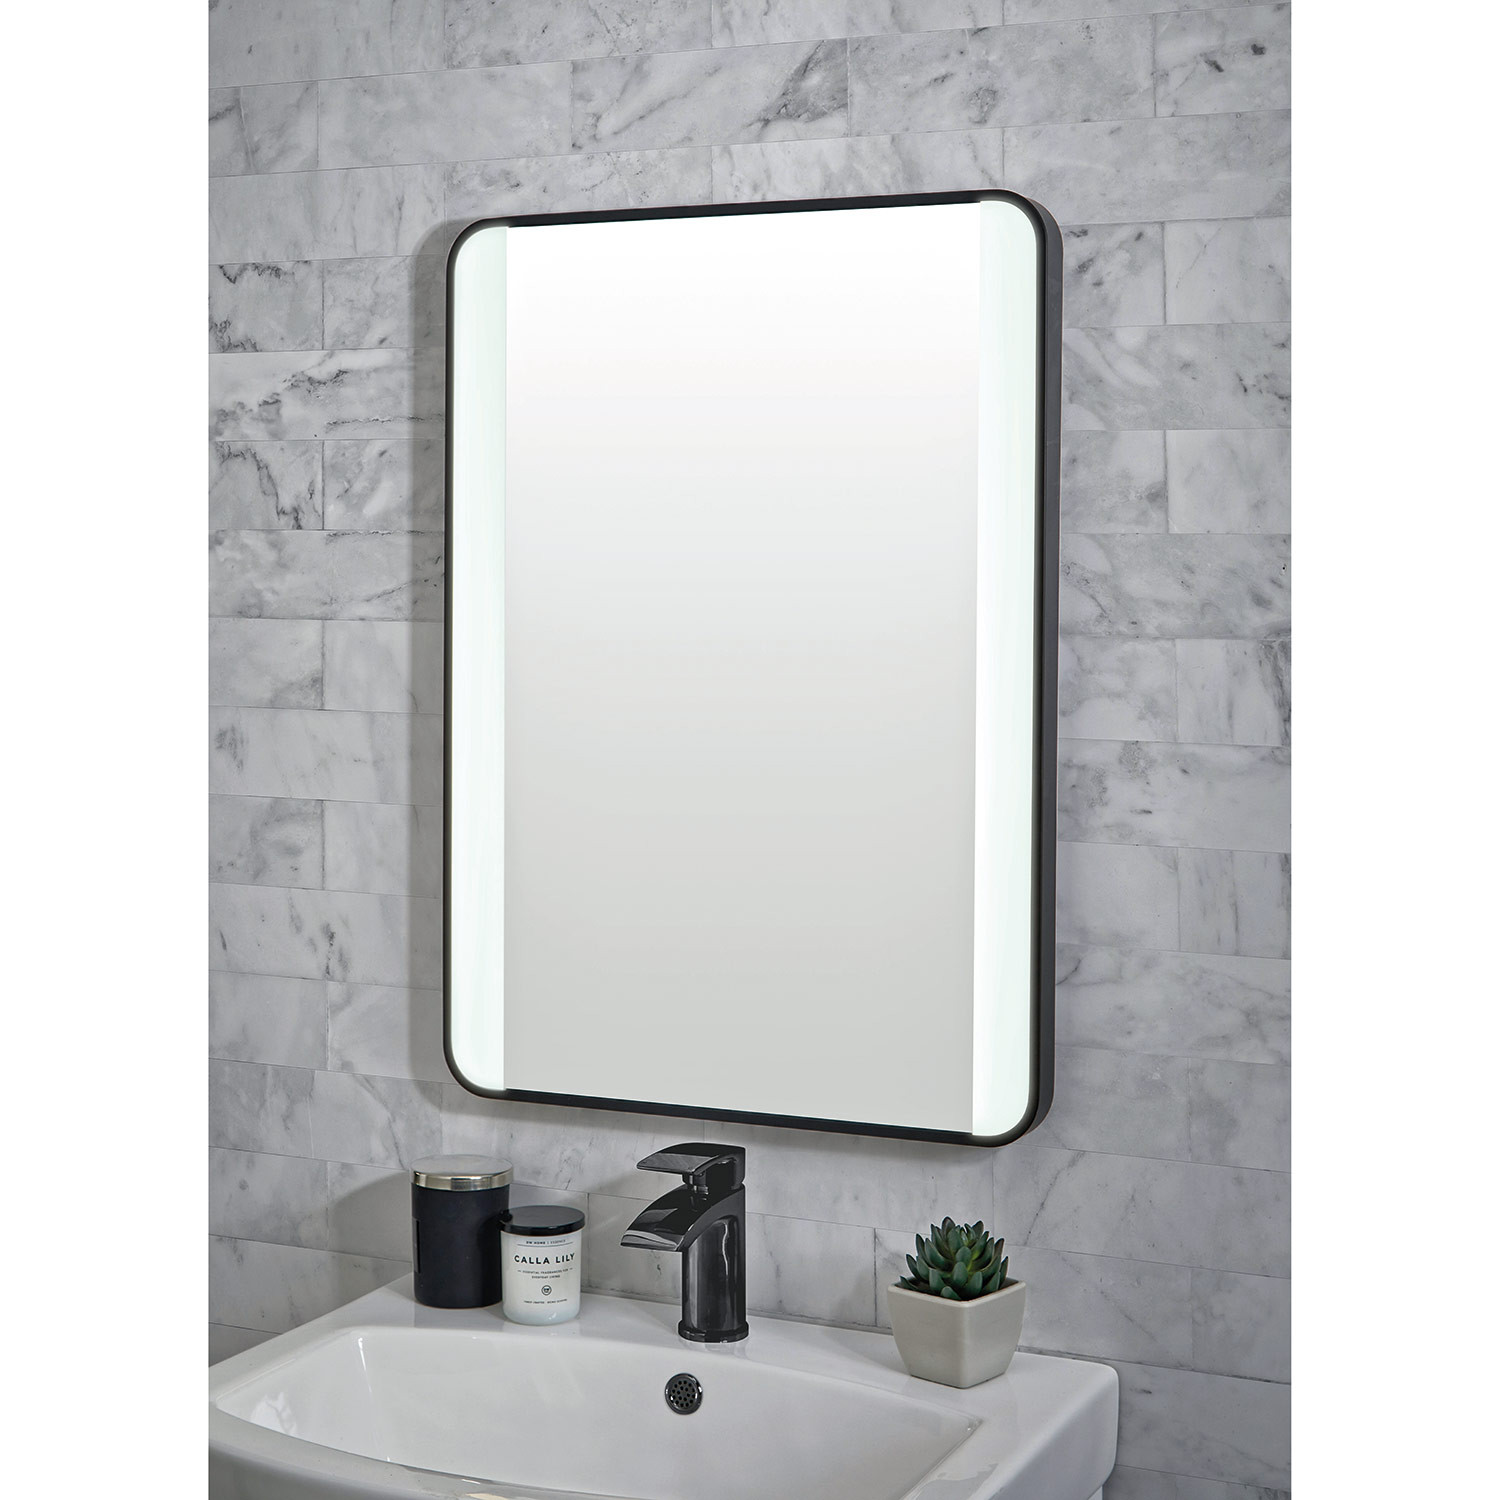 Black Framed Bathroom Mirror
 Shield Mono Black Framed Bathroom Mirror with LED Lighting